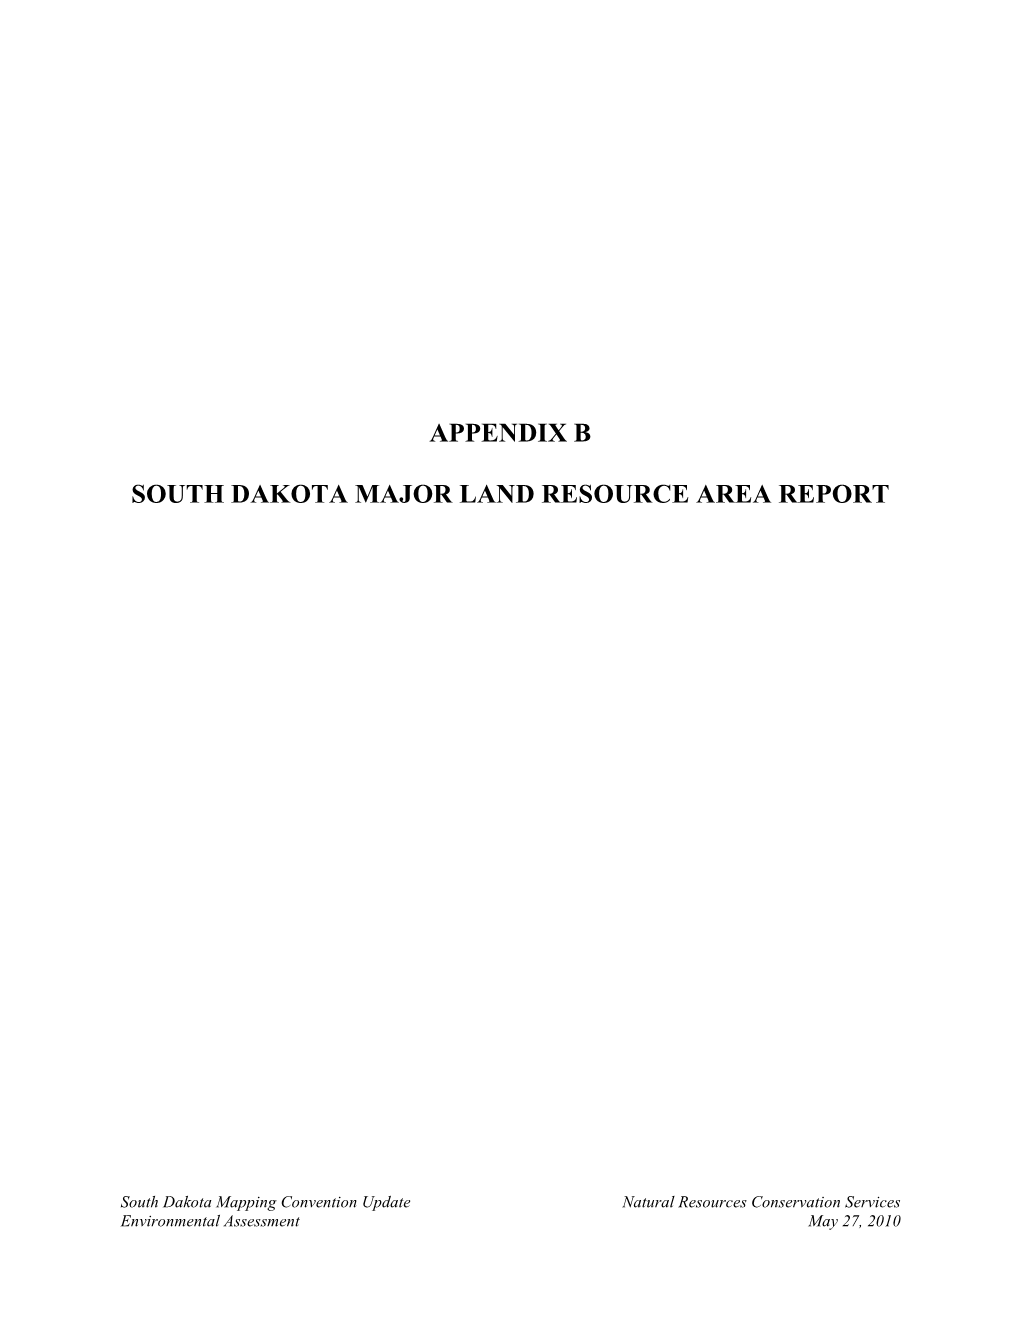 Appendix B South Dakota Major Land Resource Area Report